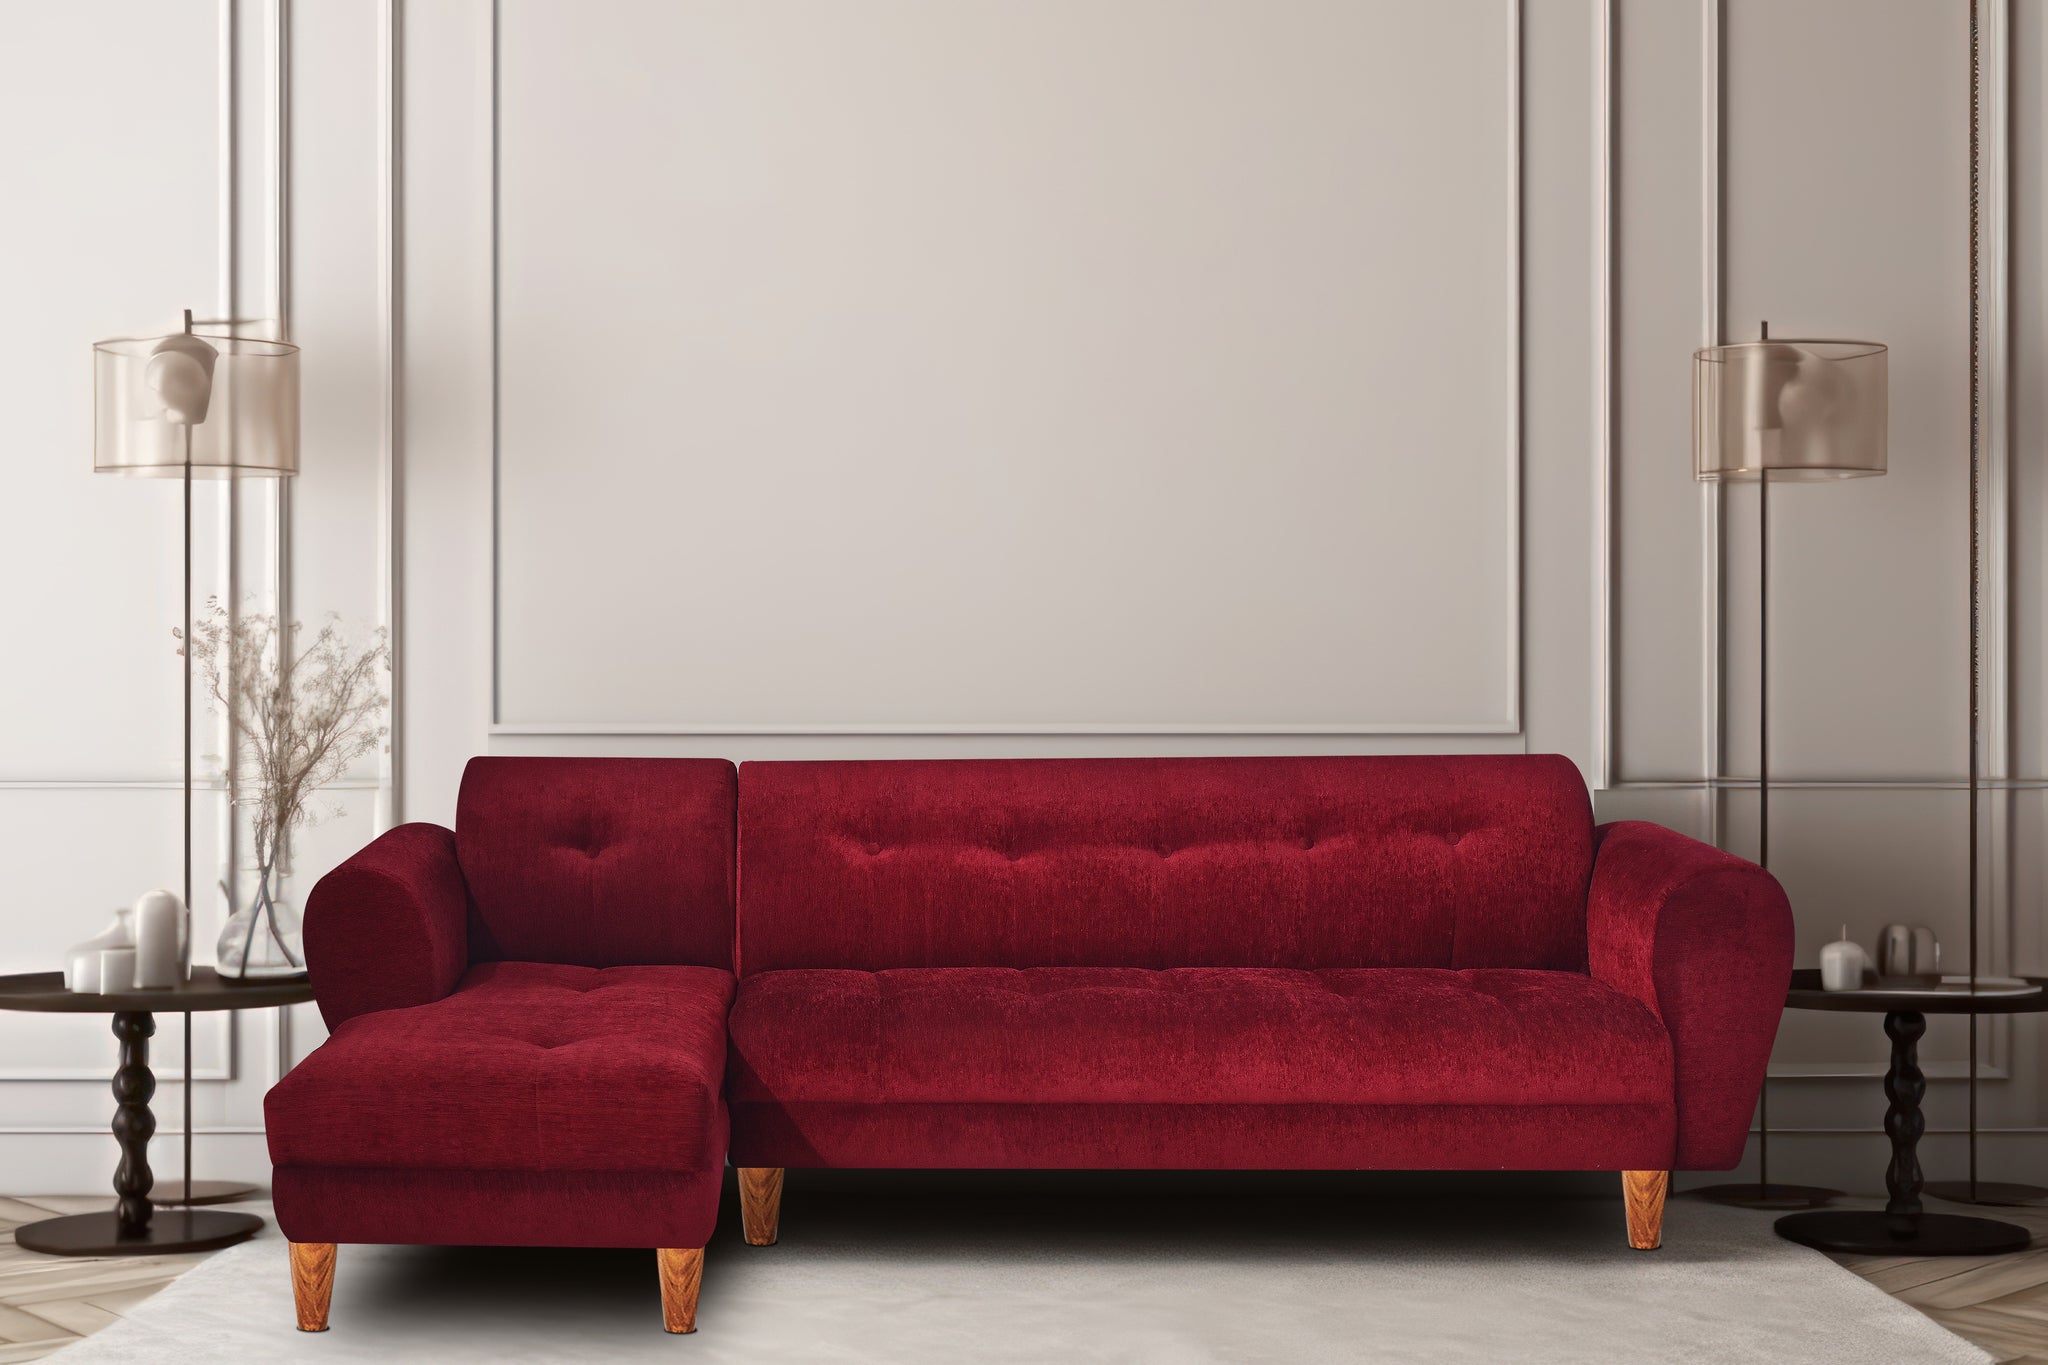 Seventh Heaven Milan 6 Seater Sofa, Extra Spacious, Chenille Molfino Fabric: 3 Year Warranty Fabric 6 Seater Sofa  (Finish Color - Maroon, DIY(Do-It-Yourself))